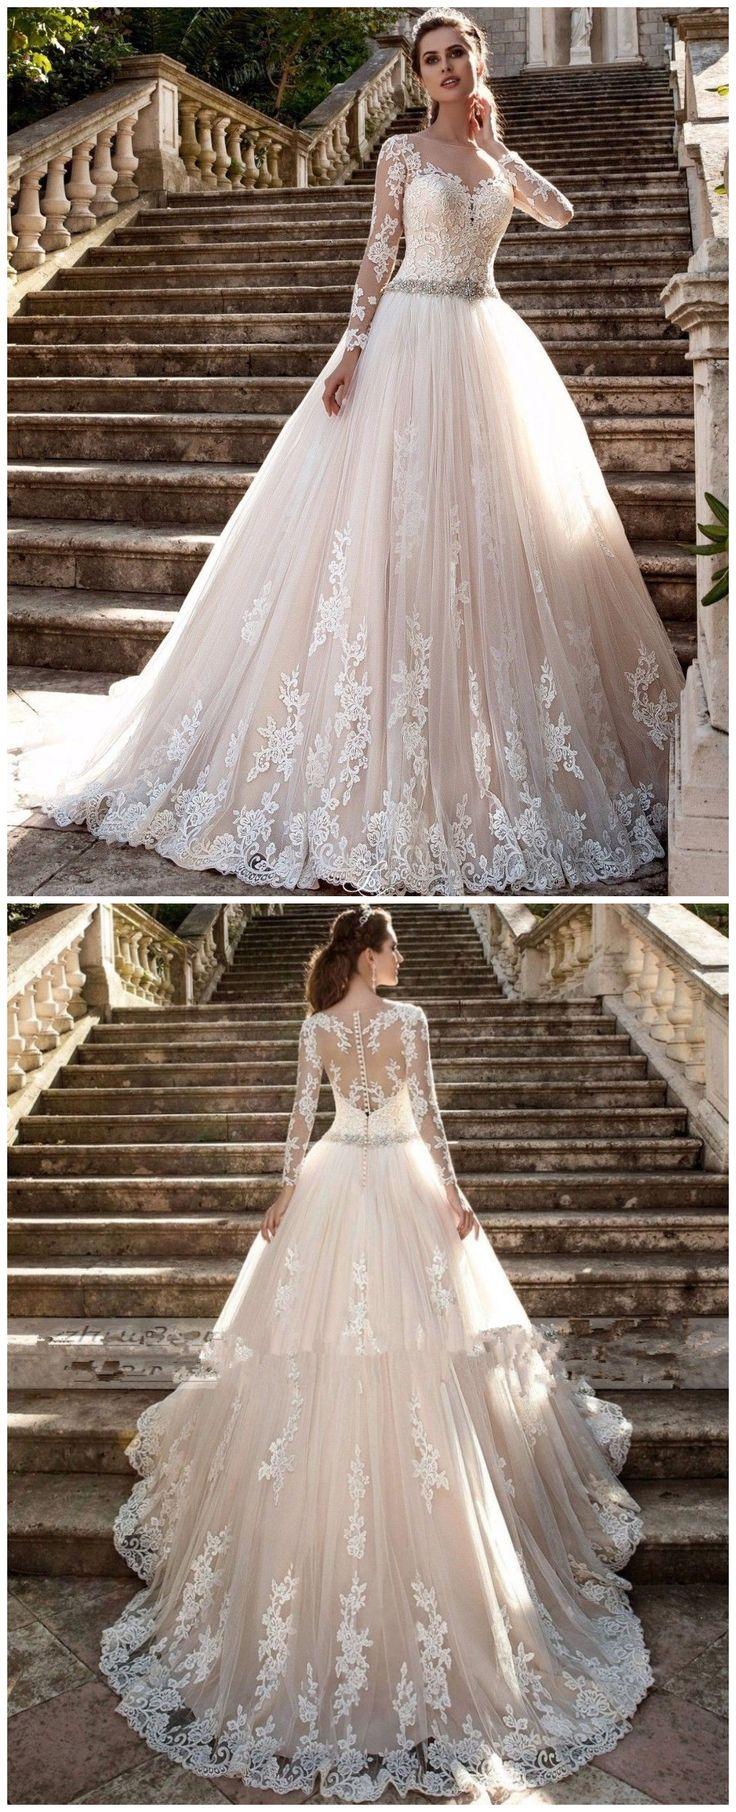 زفاف - Lace Bridal Ball Gown White Ivory Wedding Dress Custom Size Bridal Dresses From Olesa Wedding Shop